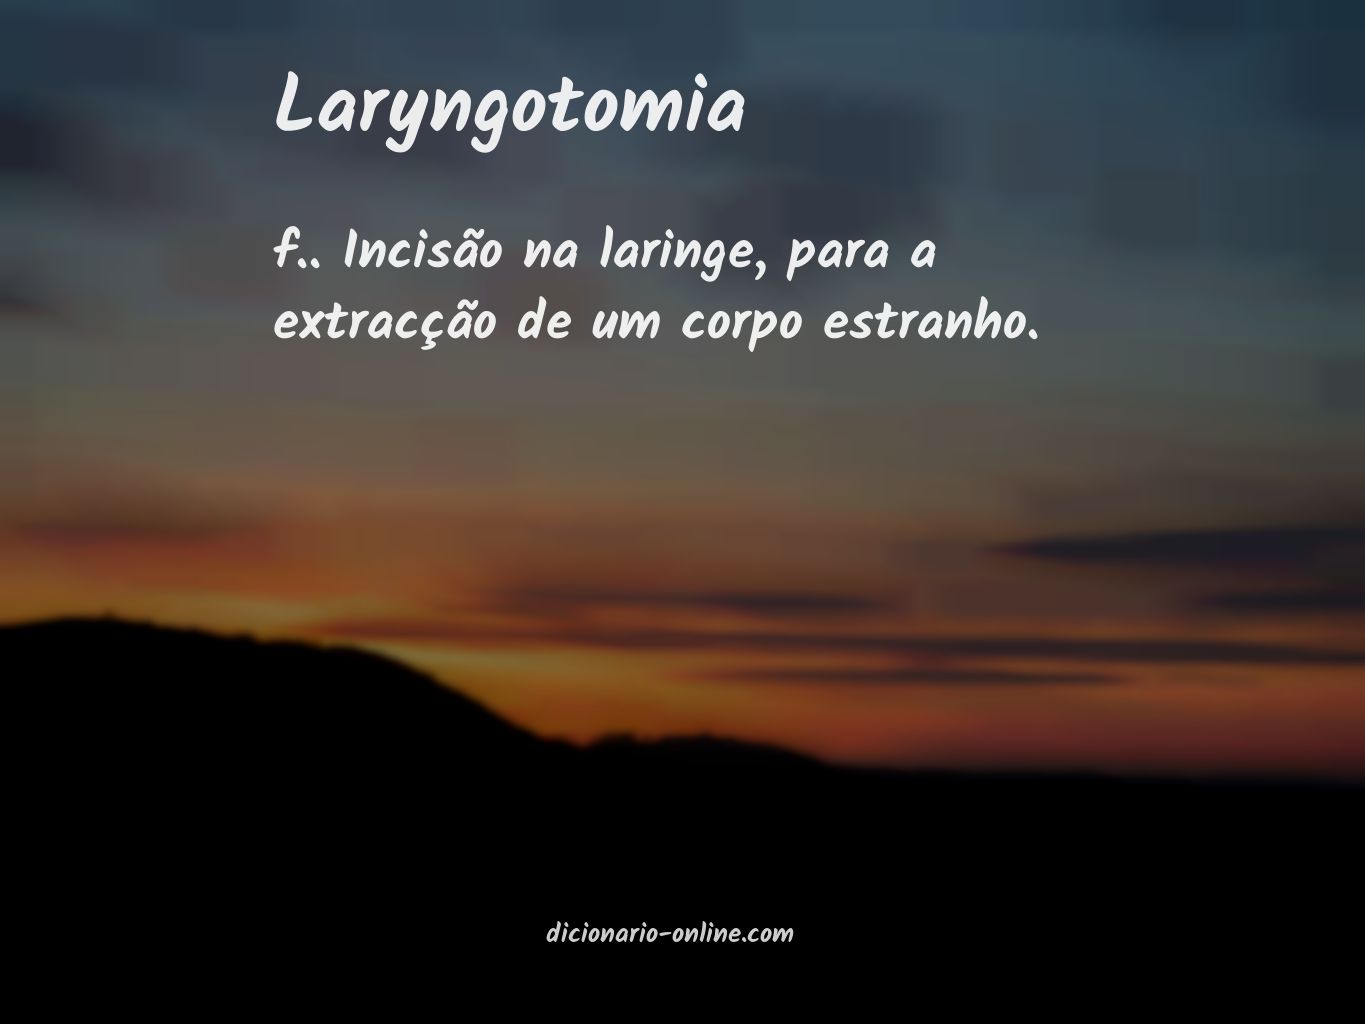 Significado de laryngotomia